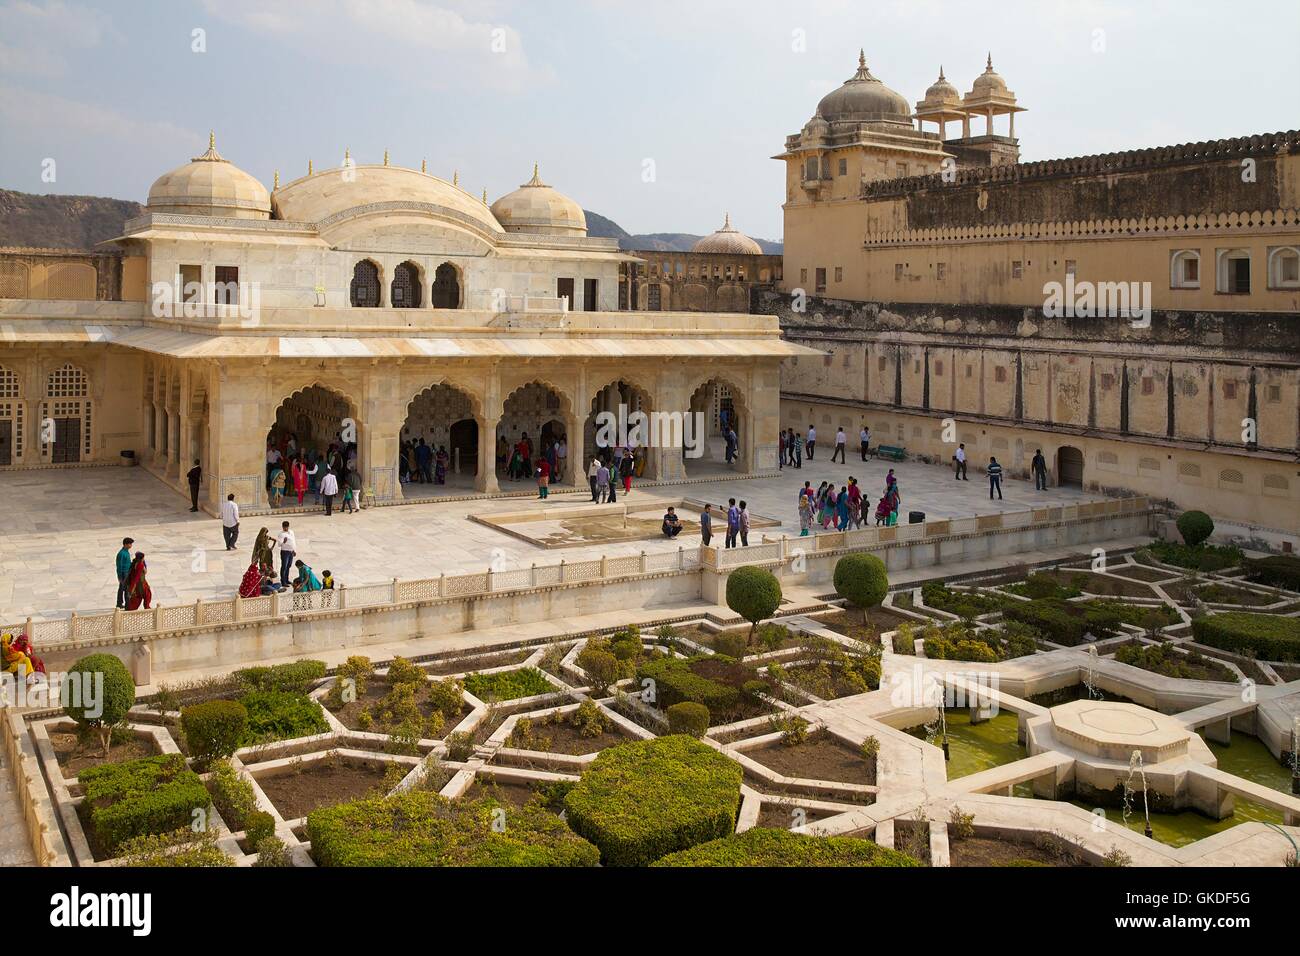 I giardini e la Sala degli Specchi, Sheesh Mahal, Ambra Fort, Jaipur, Rajasthan, India Foto Stock